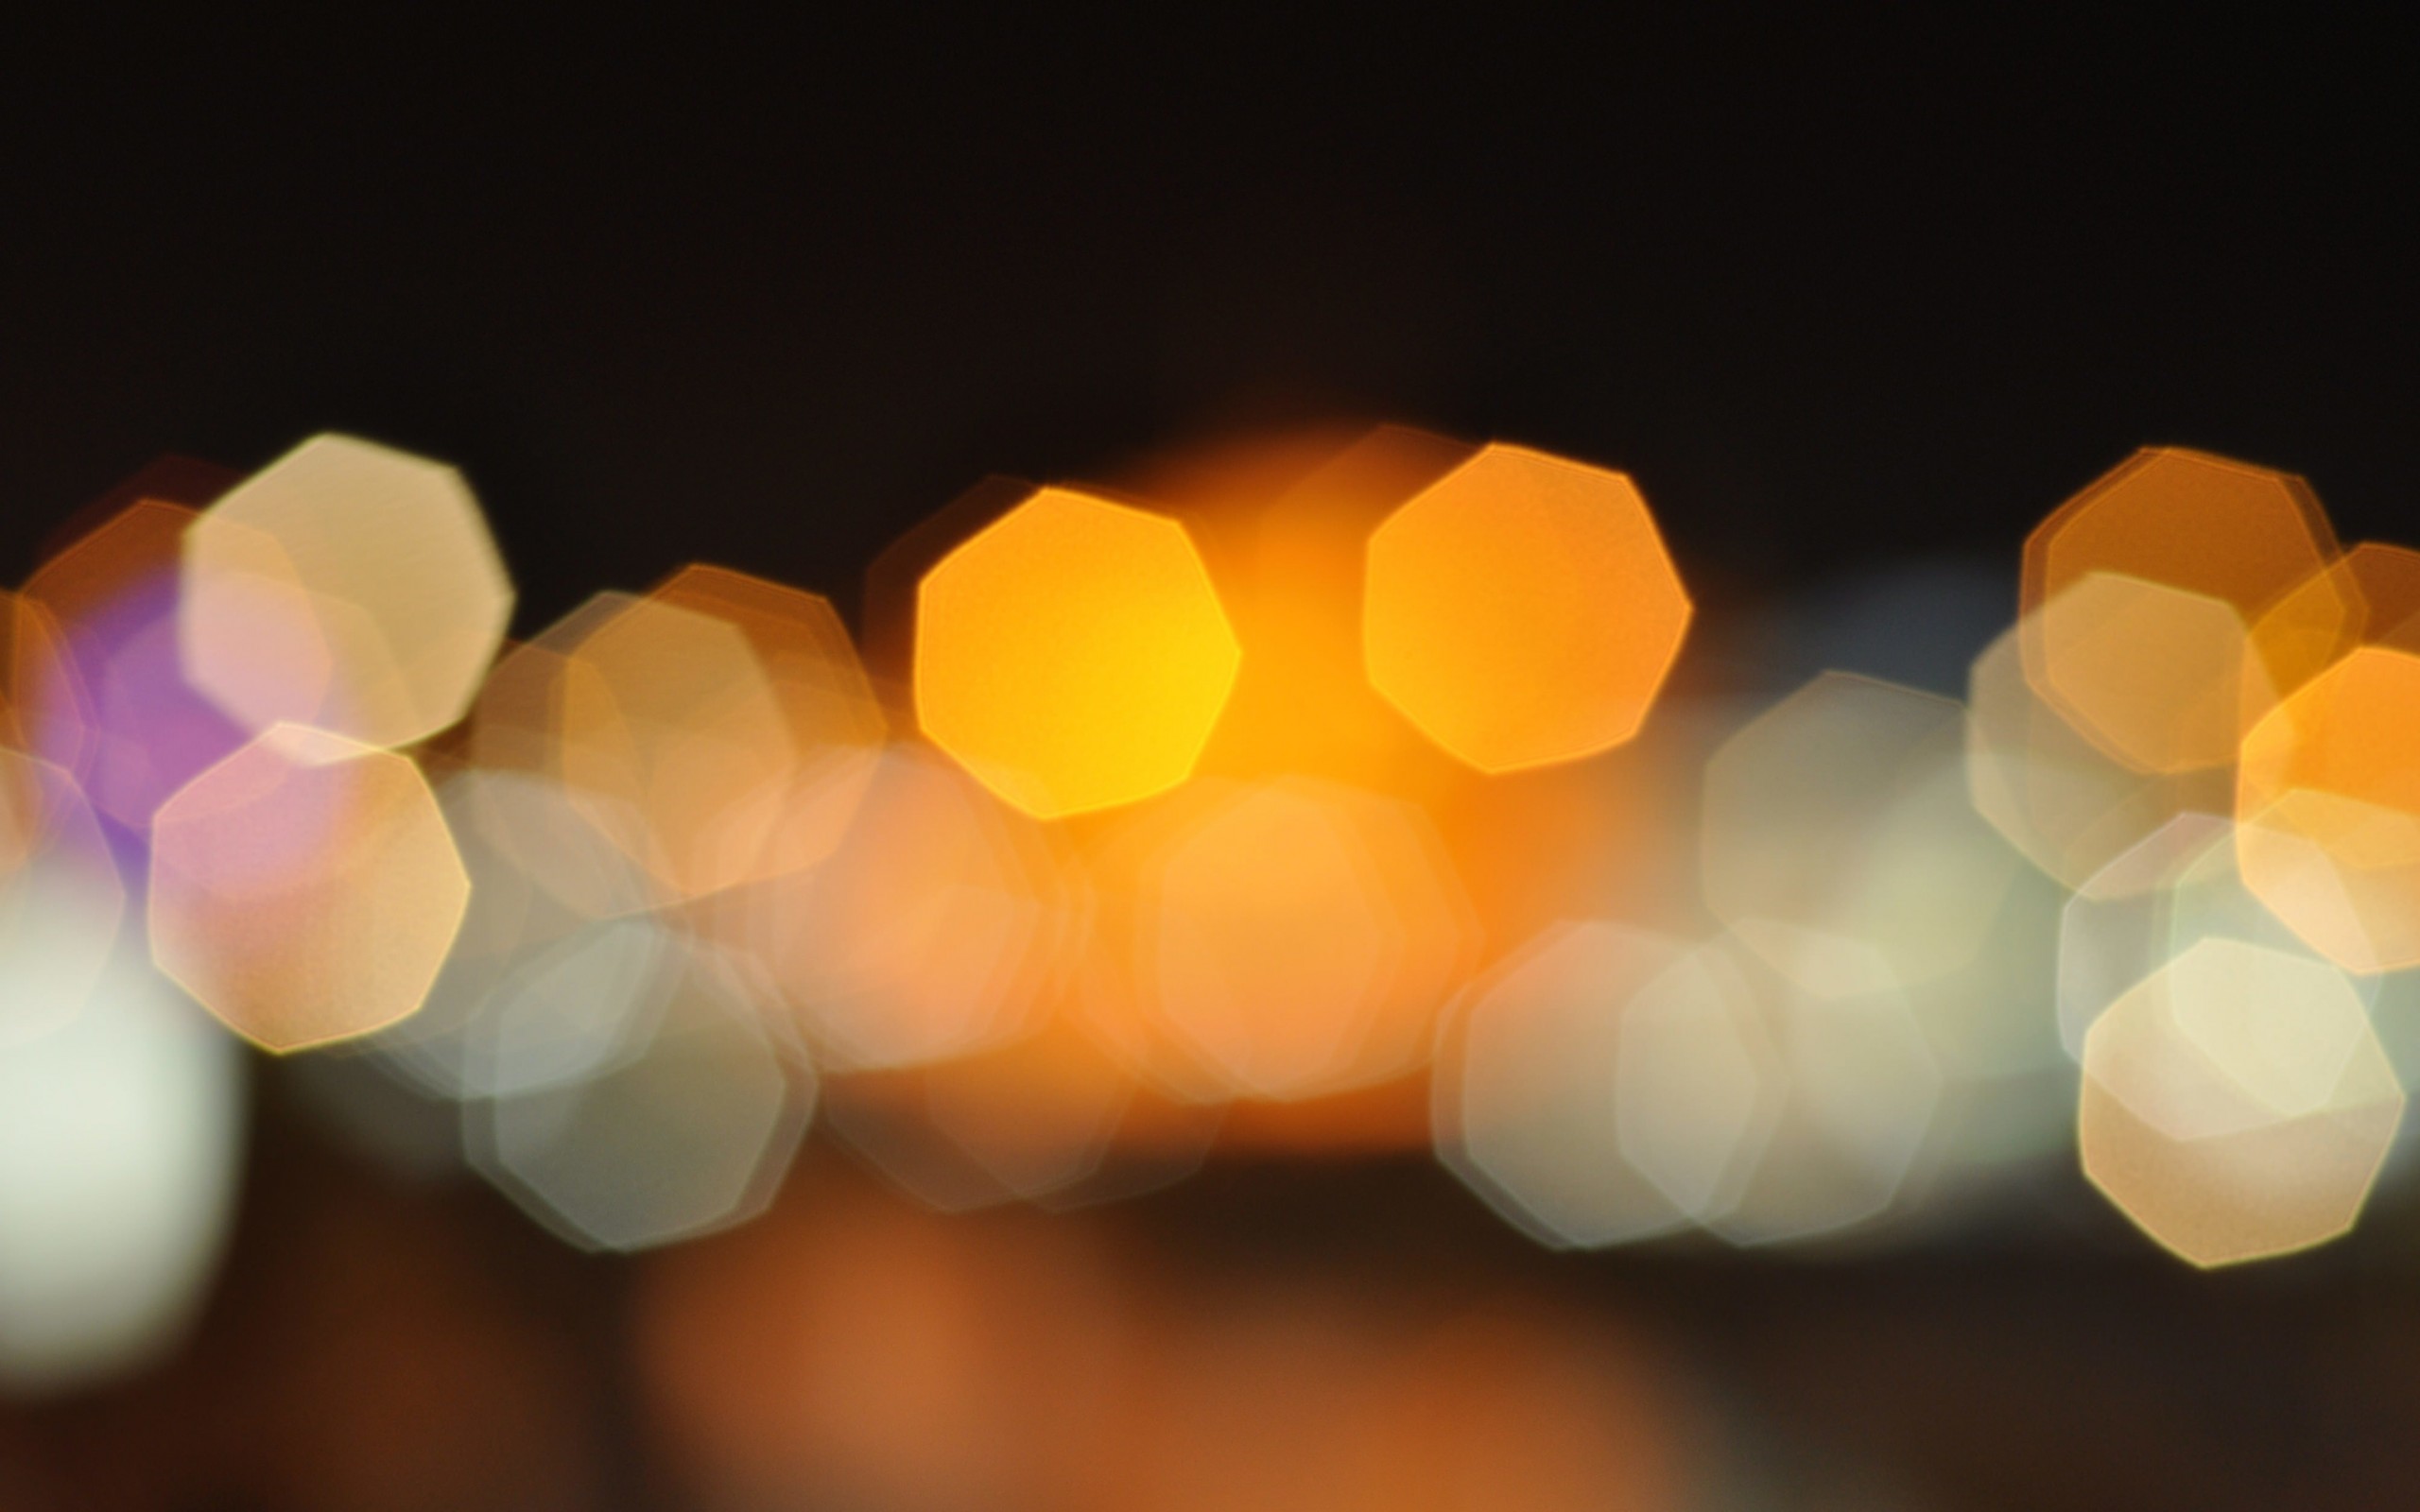 Blurred City Lights Wallpaper for Desktop 2560x1600